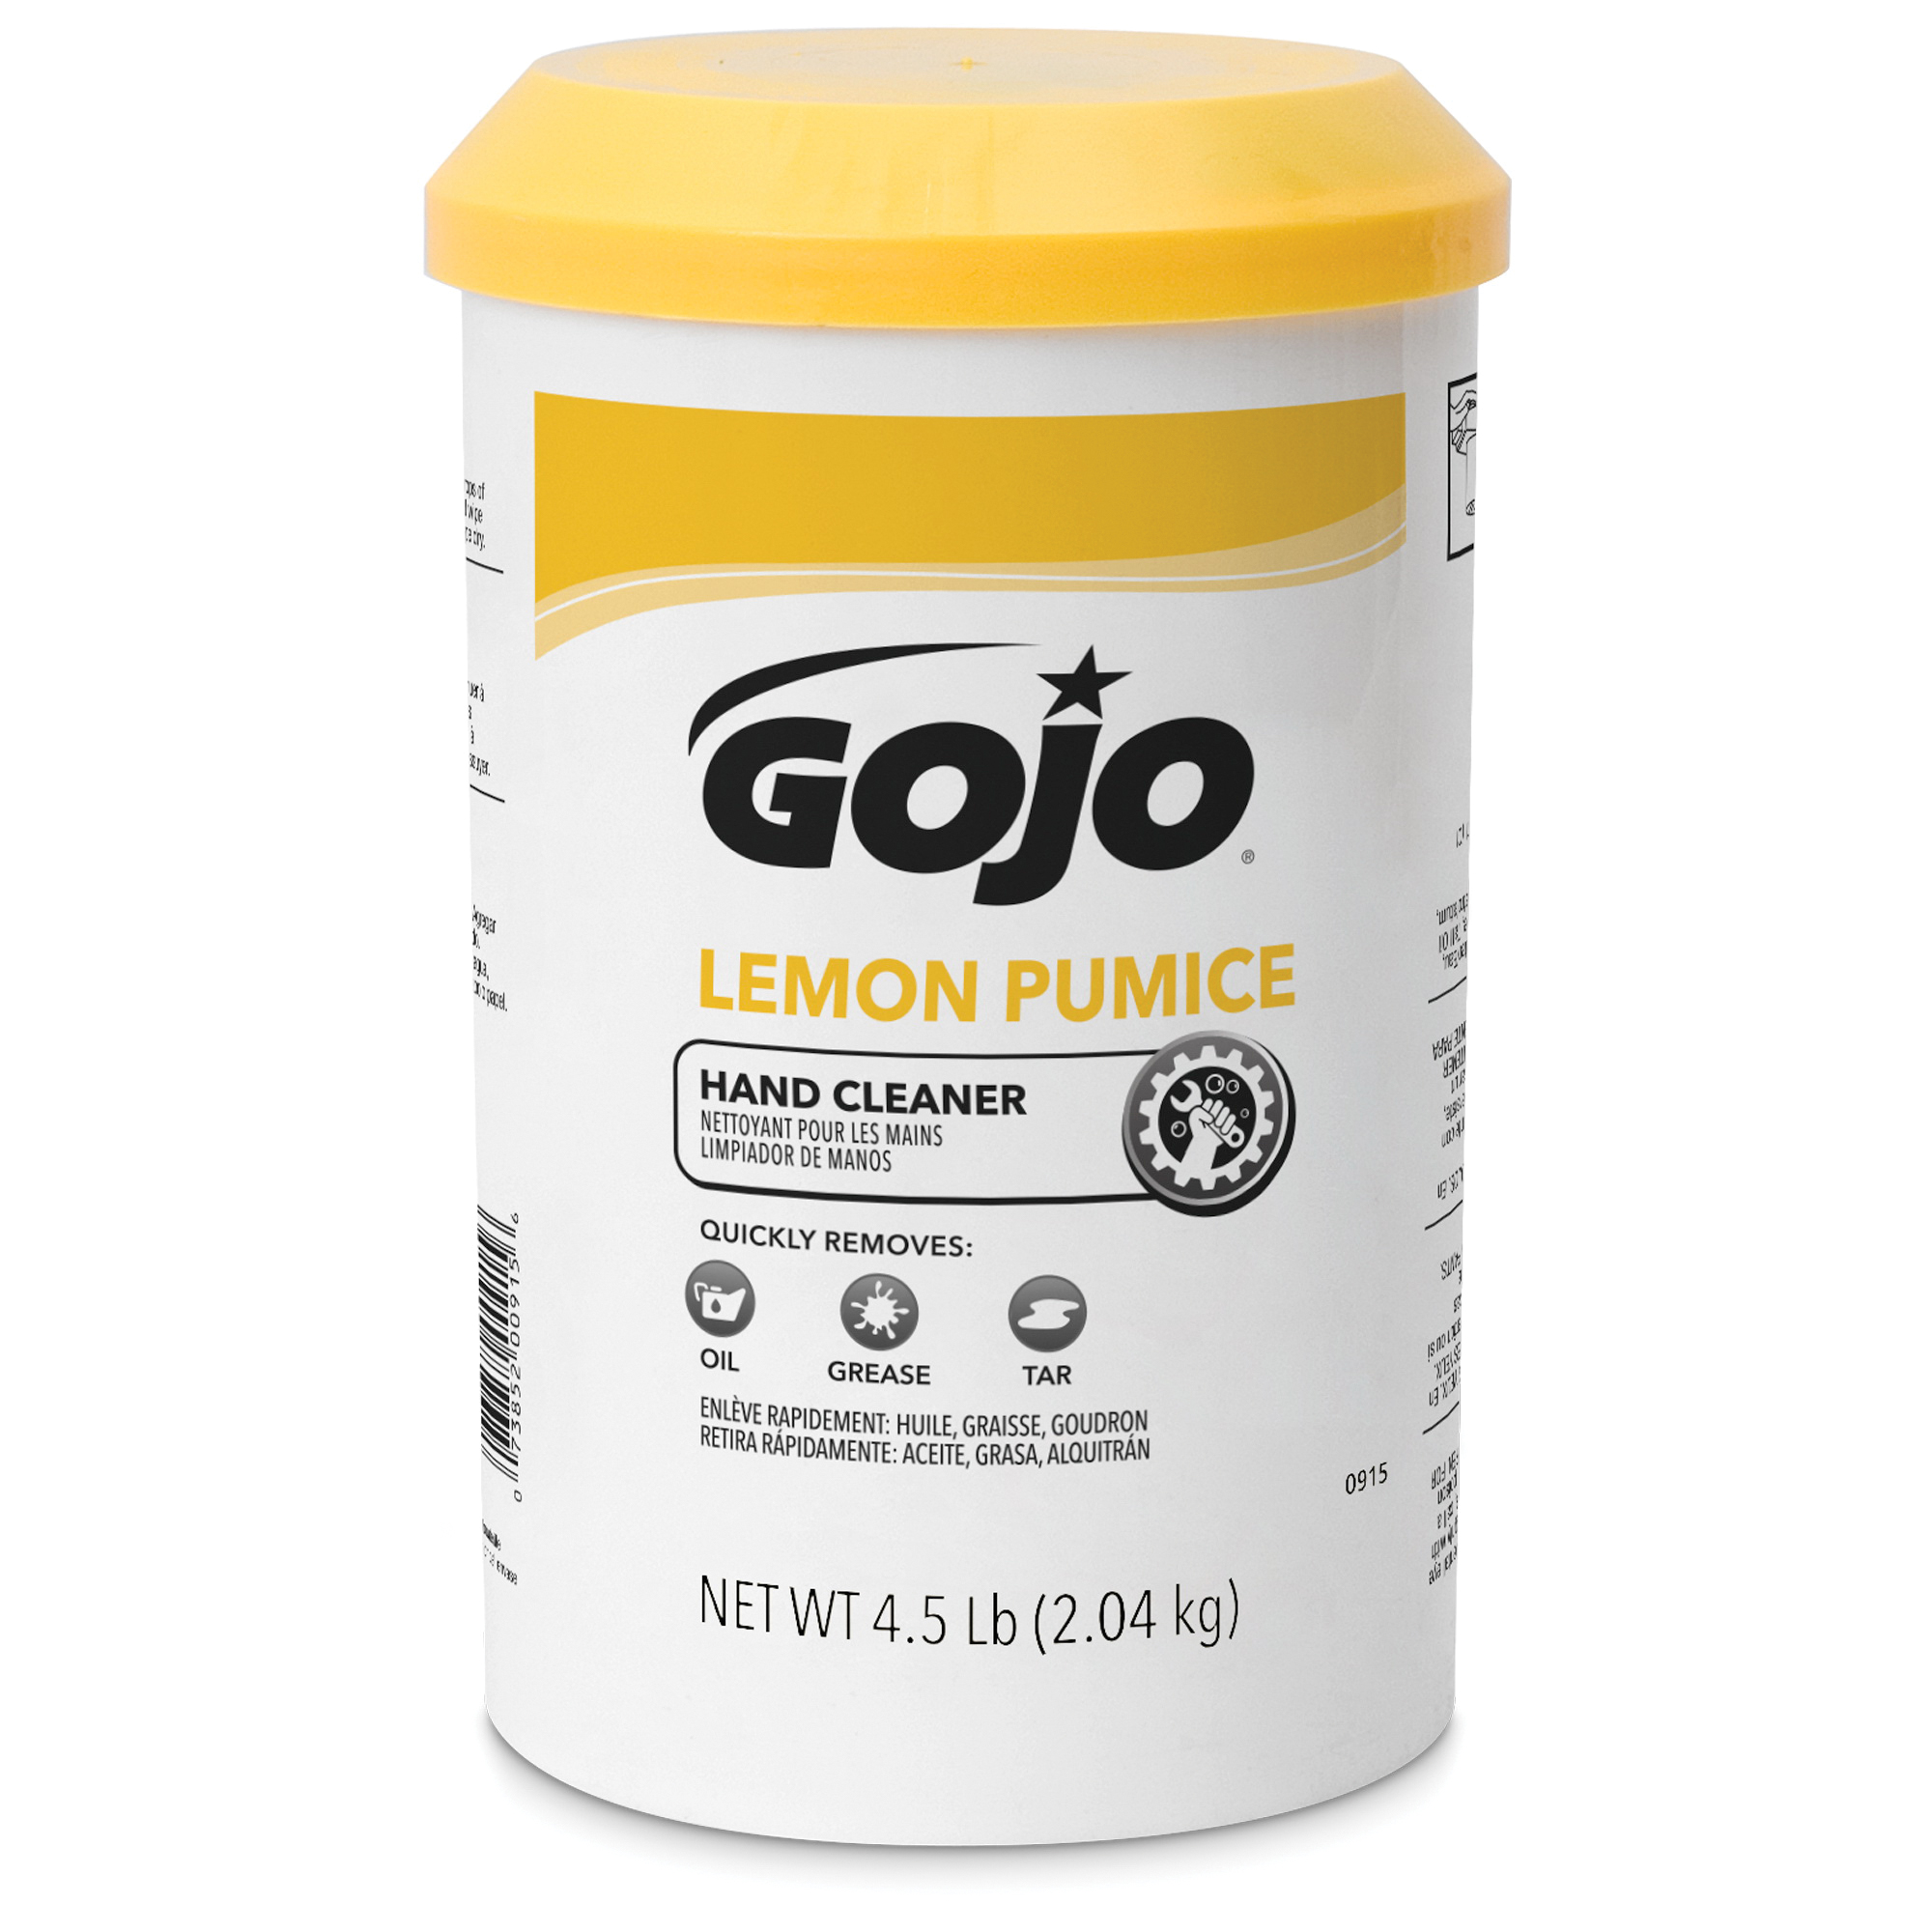 Gojo Hand Cleaner With Pumice Orange Formula 1 Gal. Plastic Bottle 